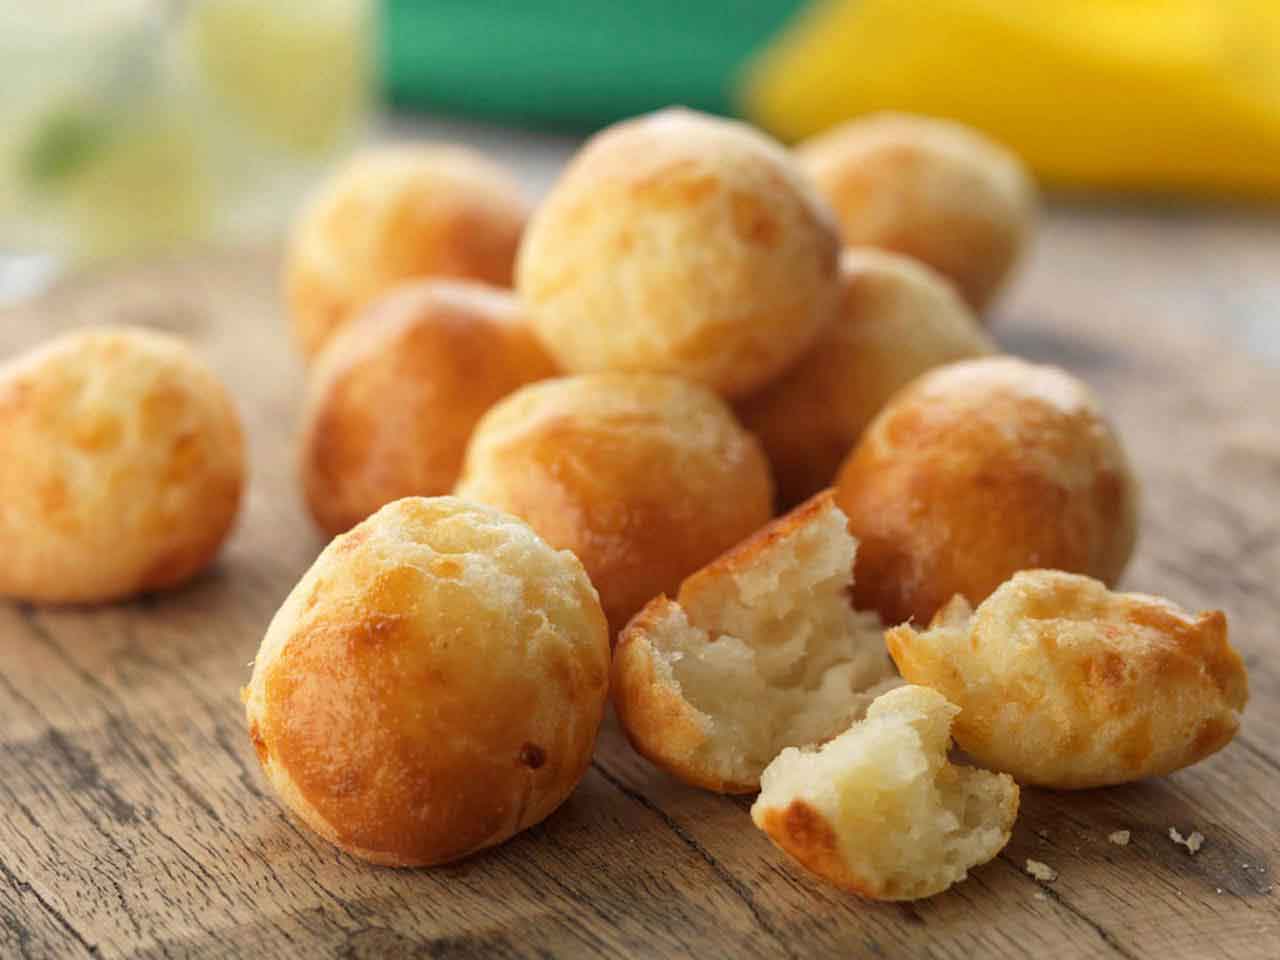 Pão de queijo - Brazilian cheese bread balls